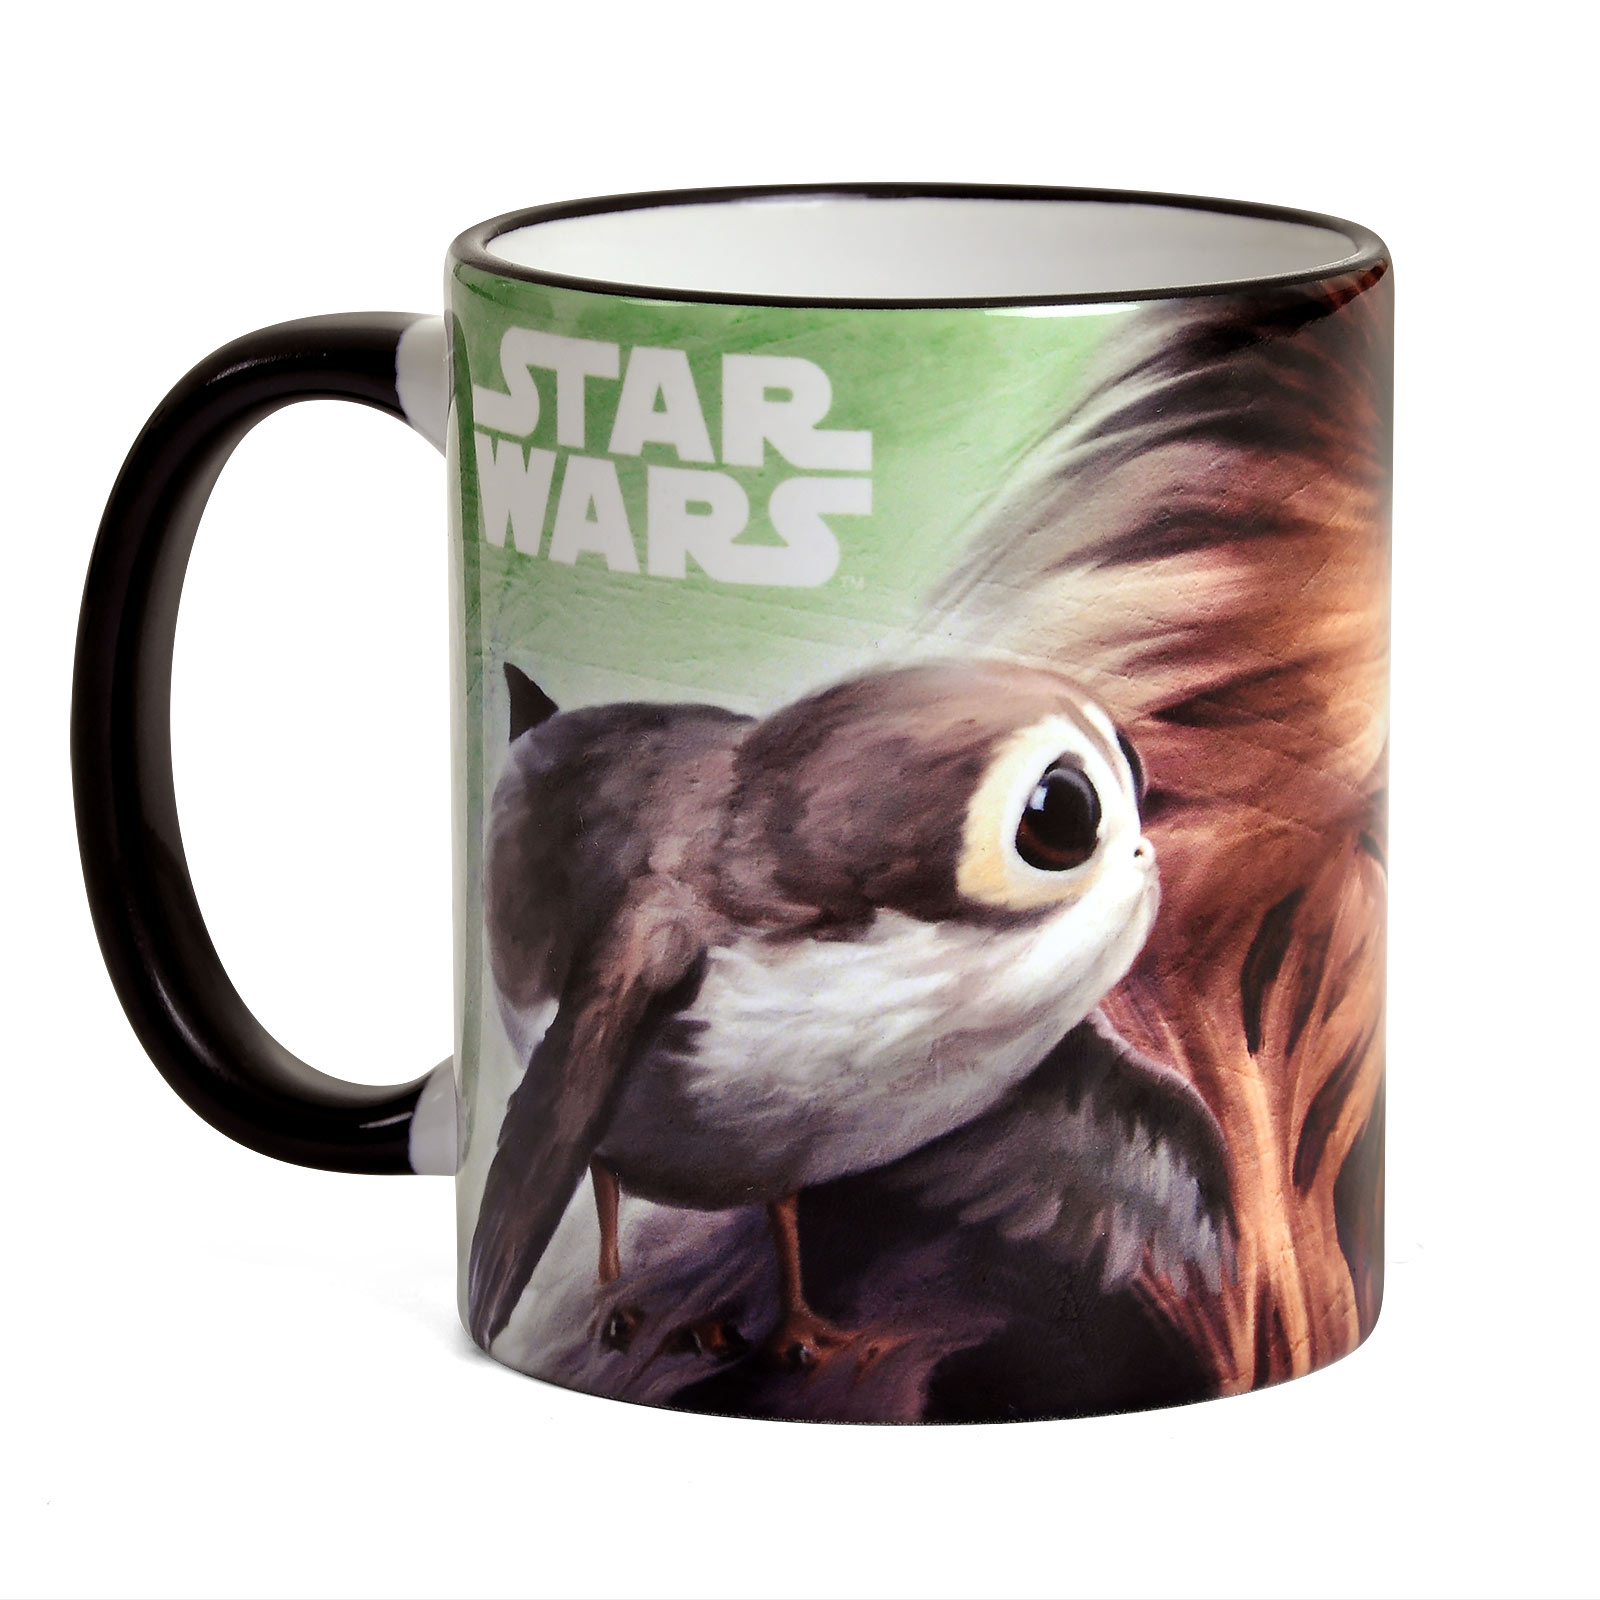 Star Wars - Porgs and Chewie mug